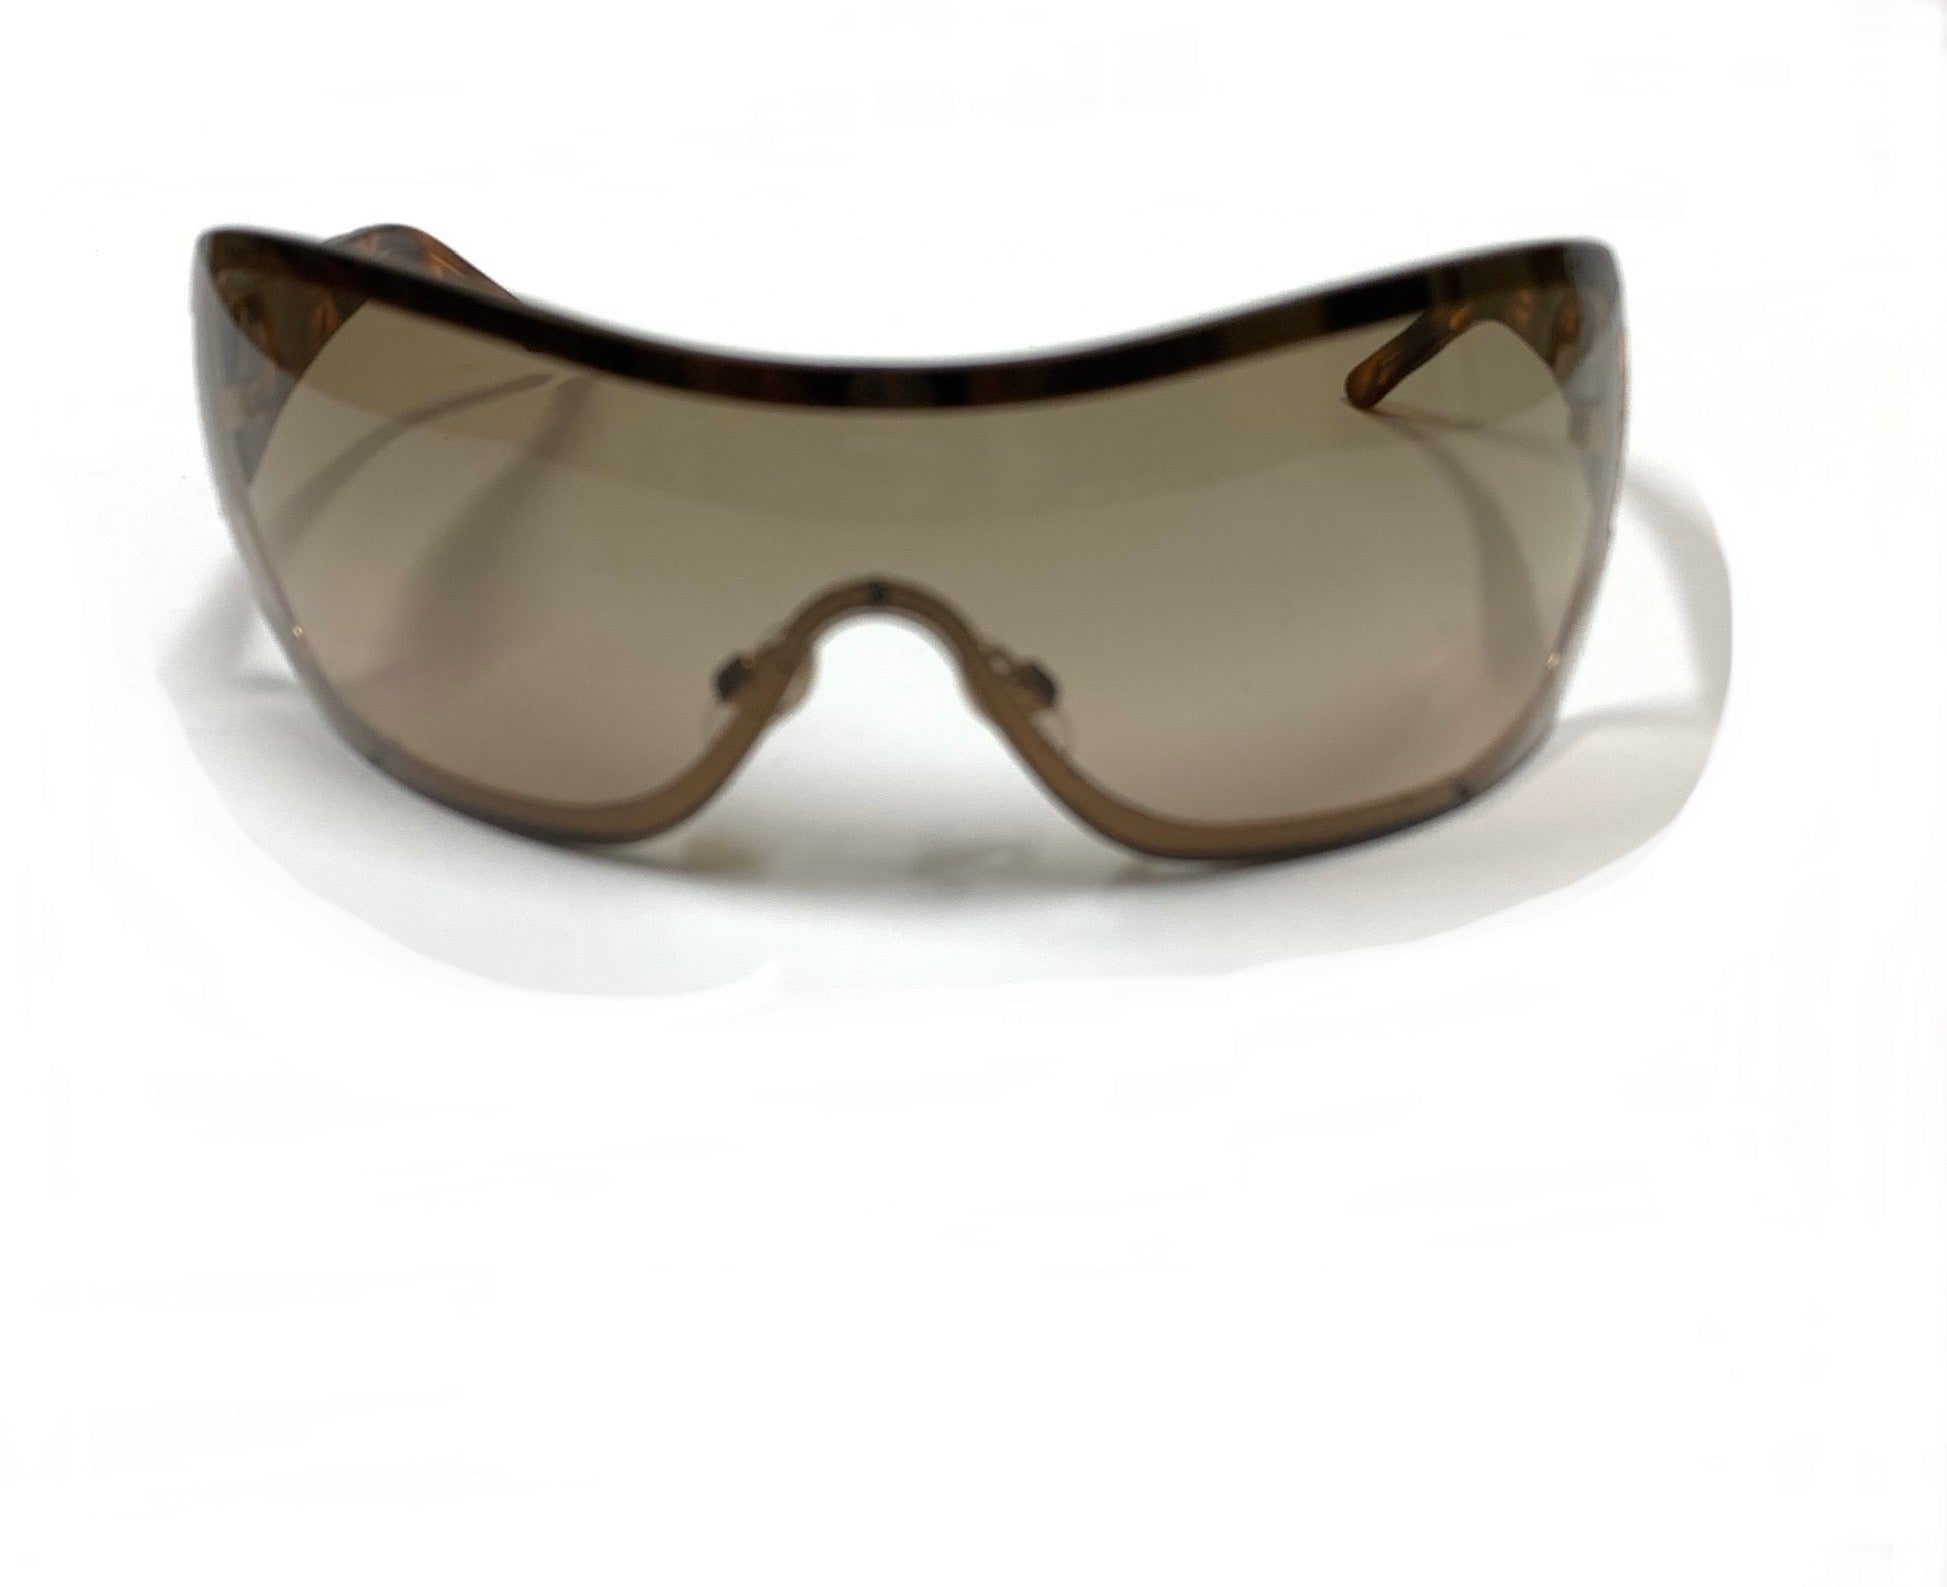 Chanel Rectangle Sunglasses - Acetate, Tweed and Diamanté, Multicolor - Polarized - UV Protected - Women's Sunglasses - 9130 1282/S6